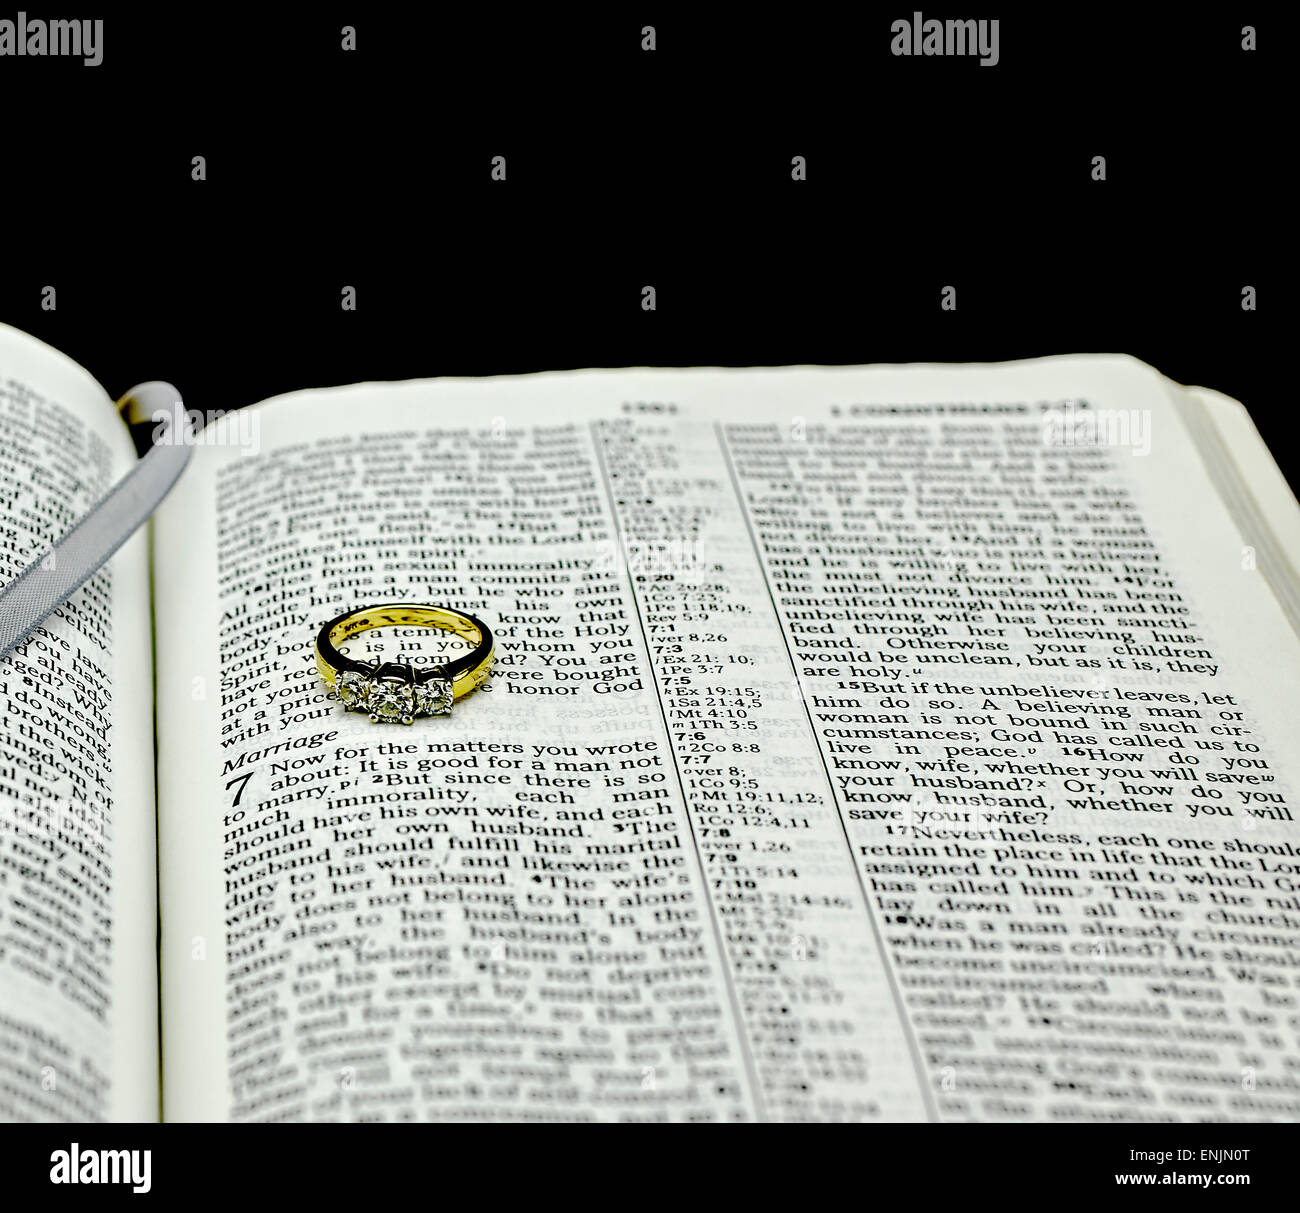 Single diamond wedding ring on Bible open to Marriage on Black Background Stock Photo